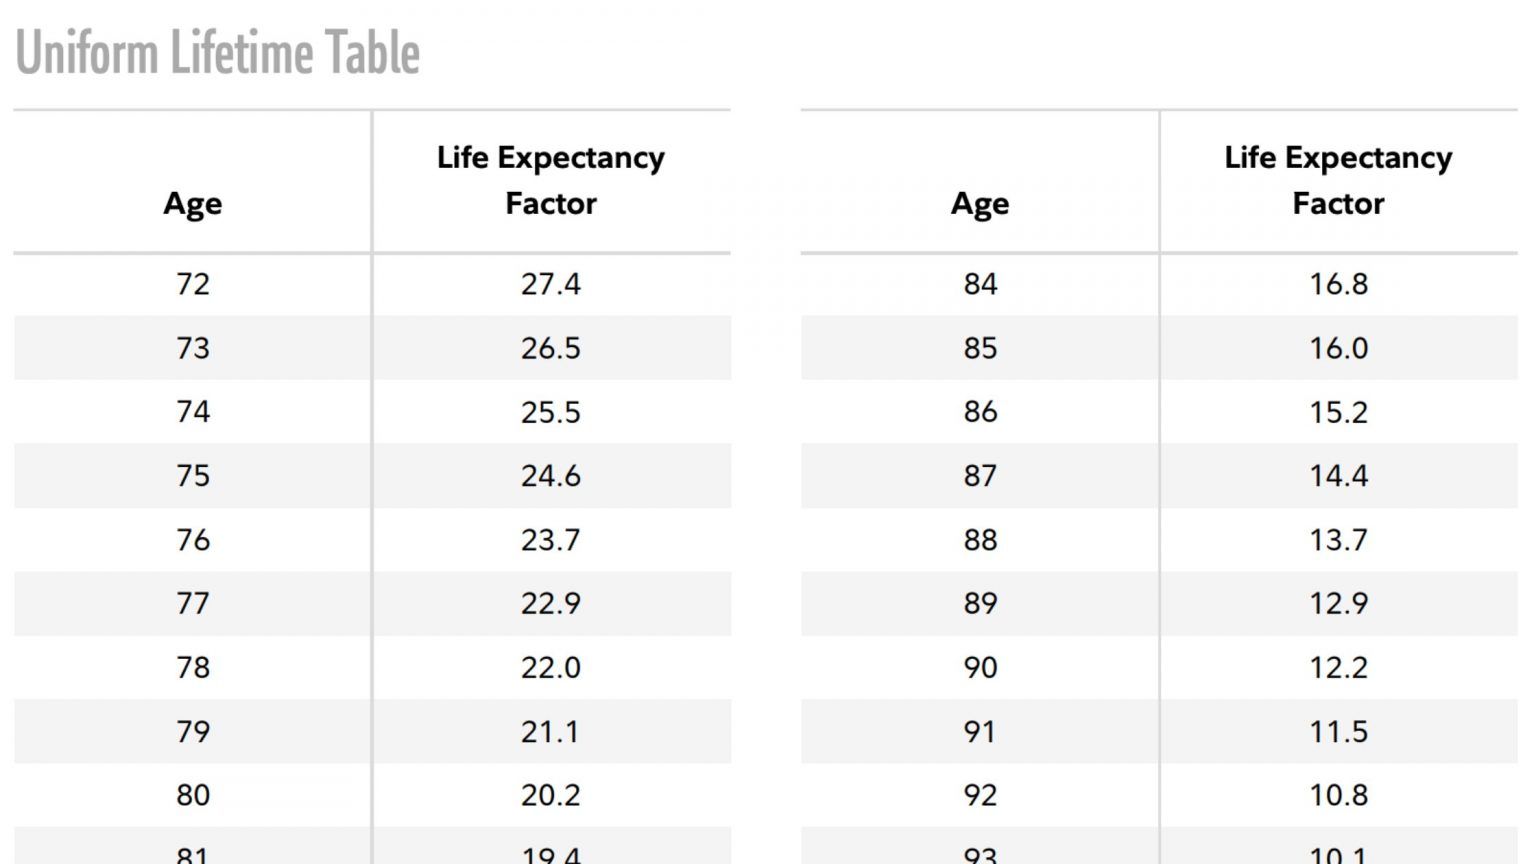 a table showing the uniform lifetime table